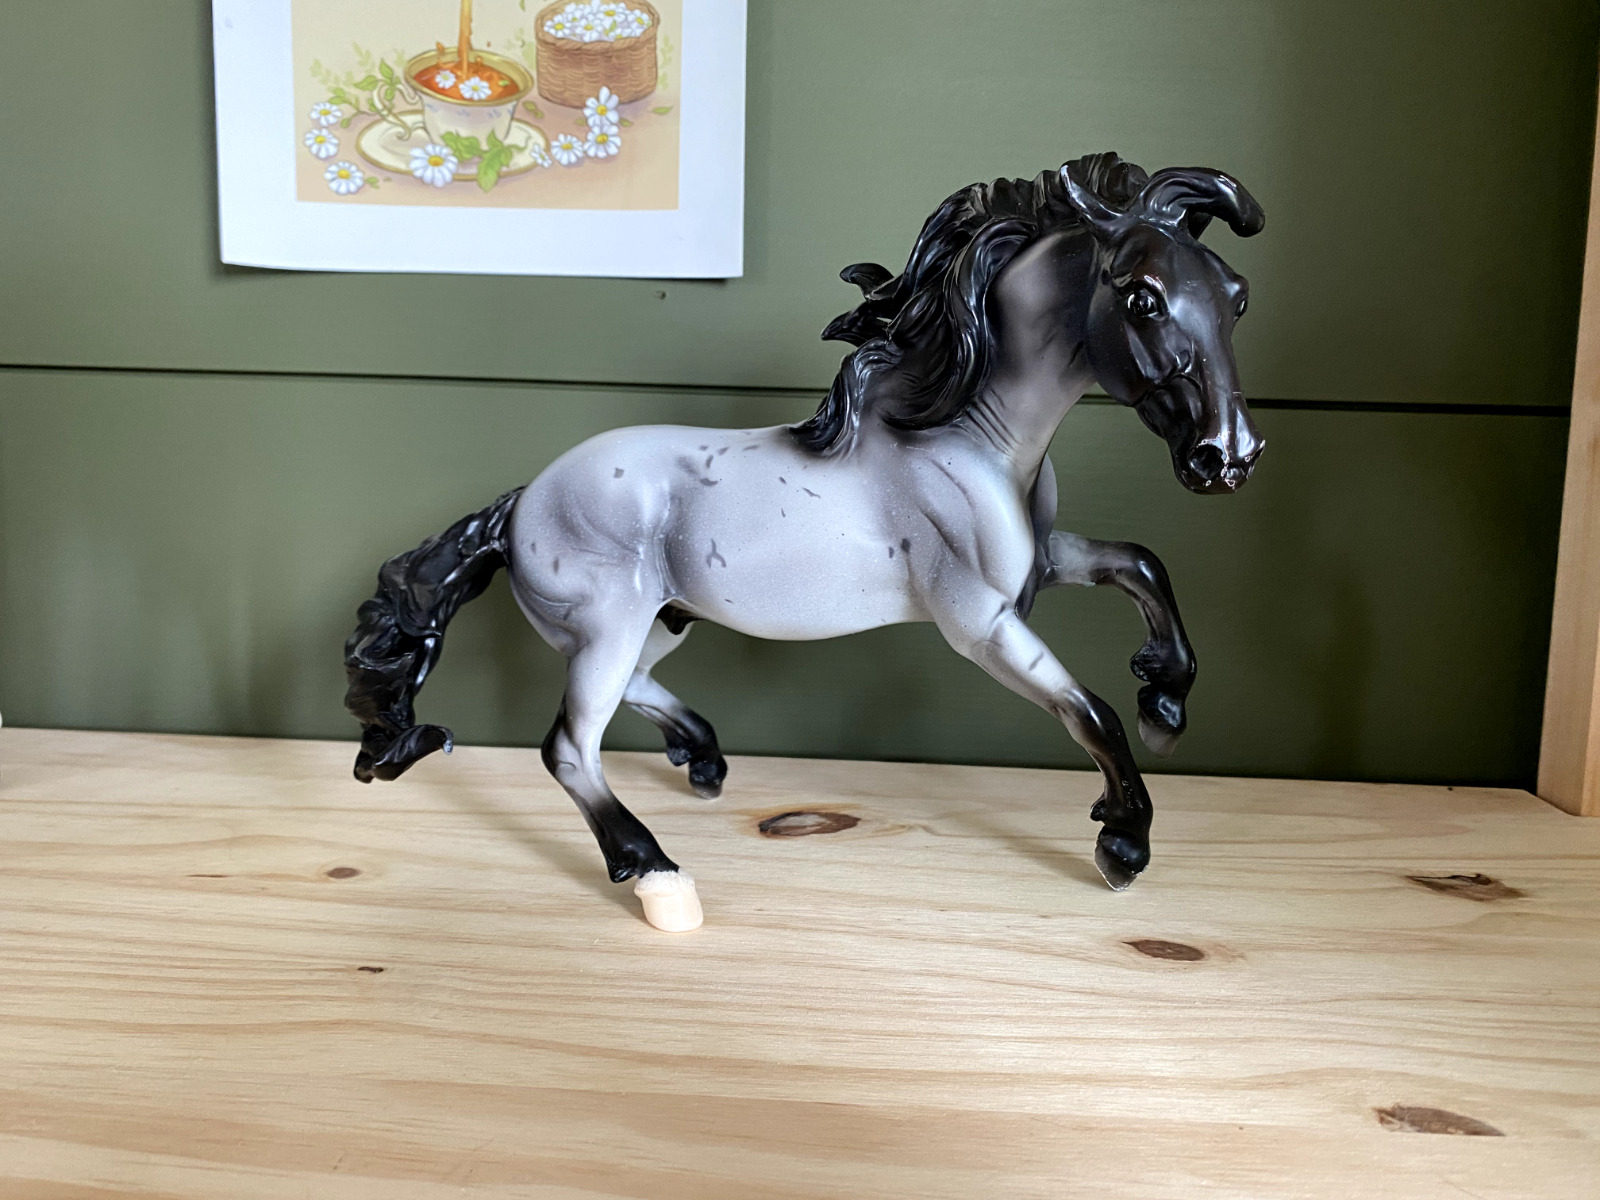 Breyer Nokota Horse Limited Edition #1279 - Blue Roan on the Nokota mold